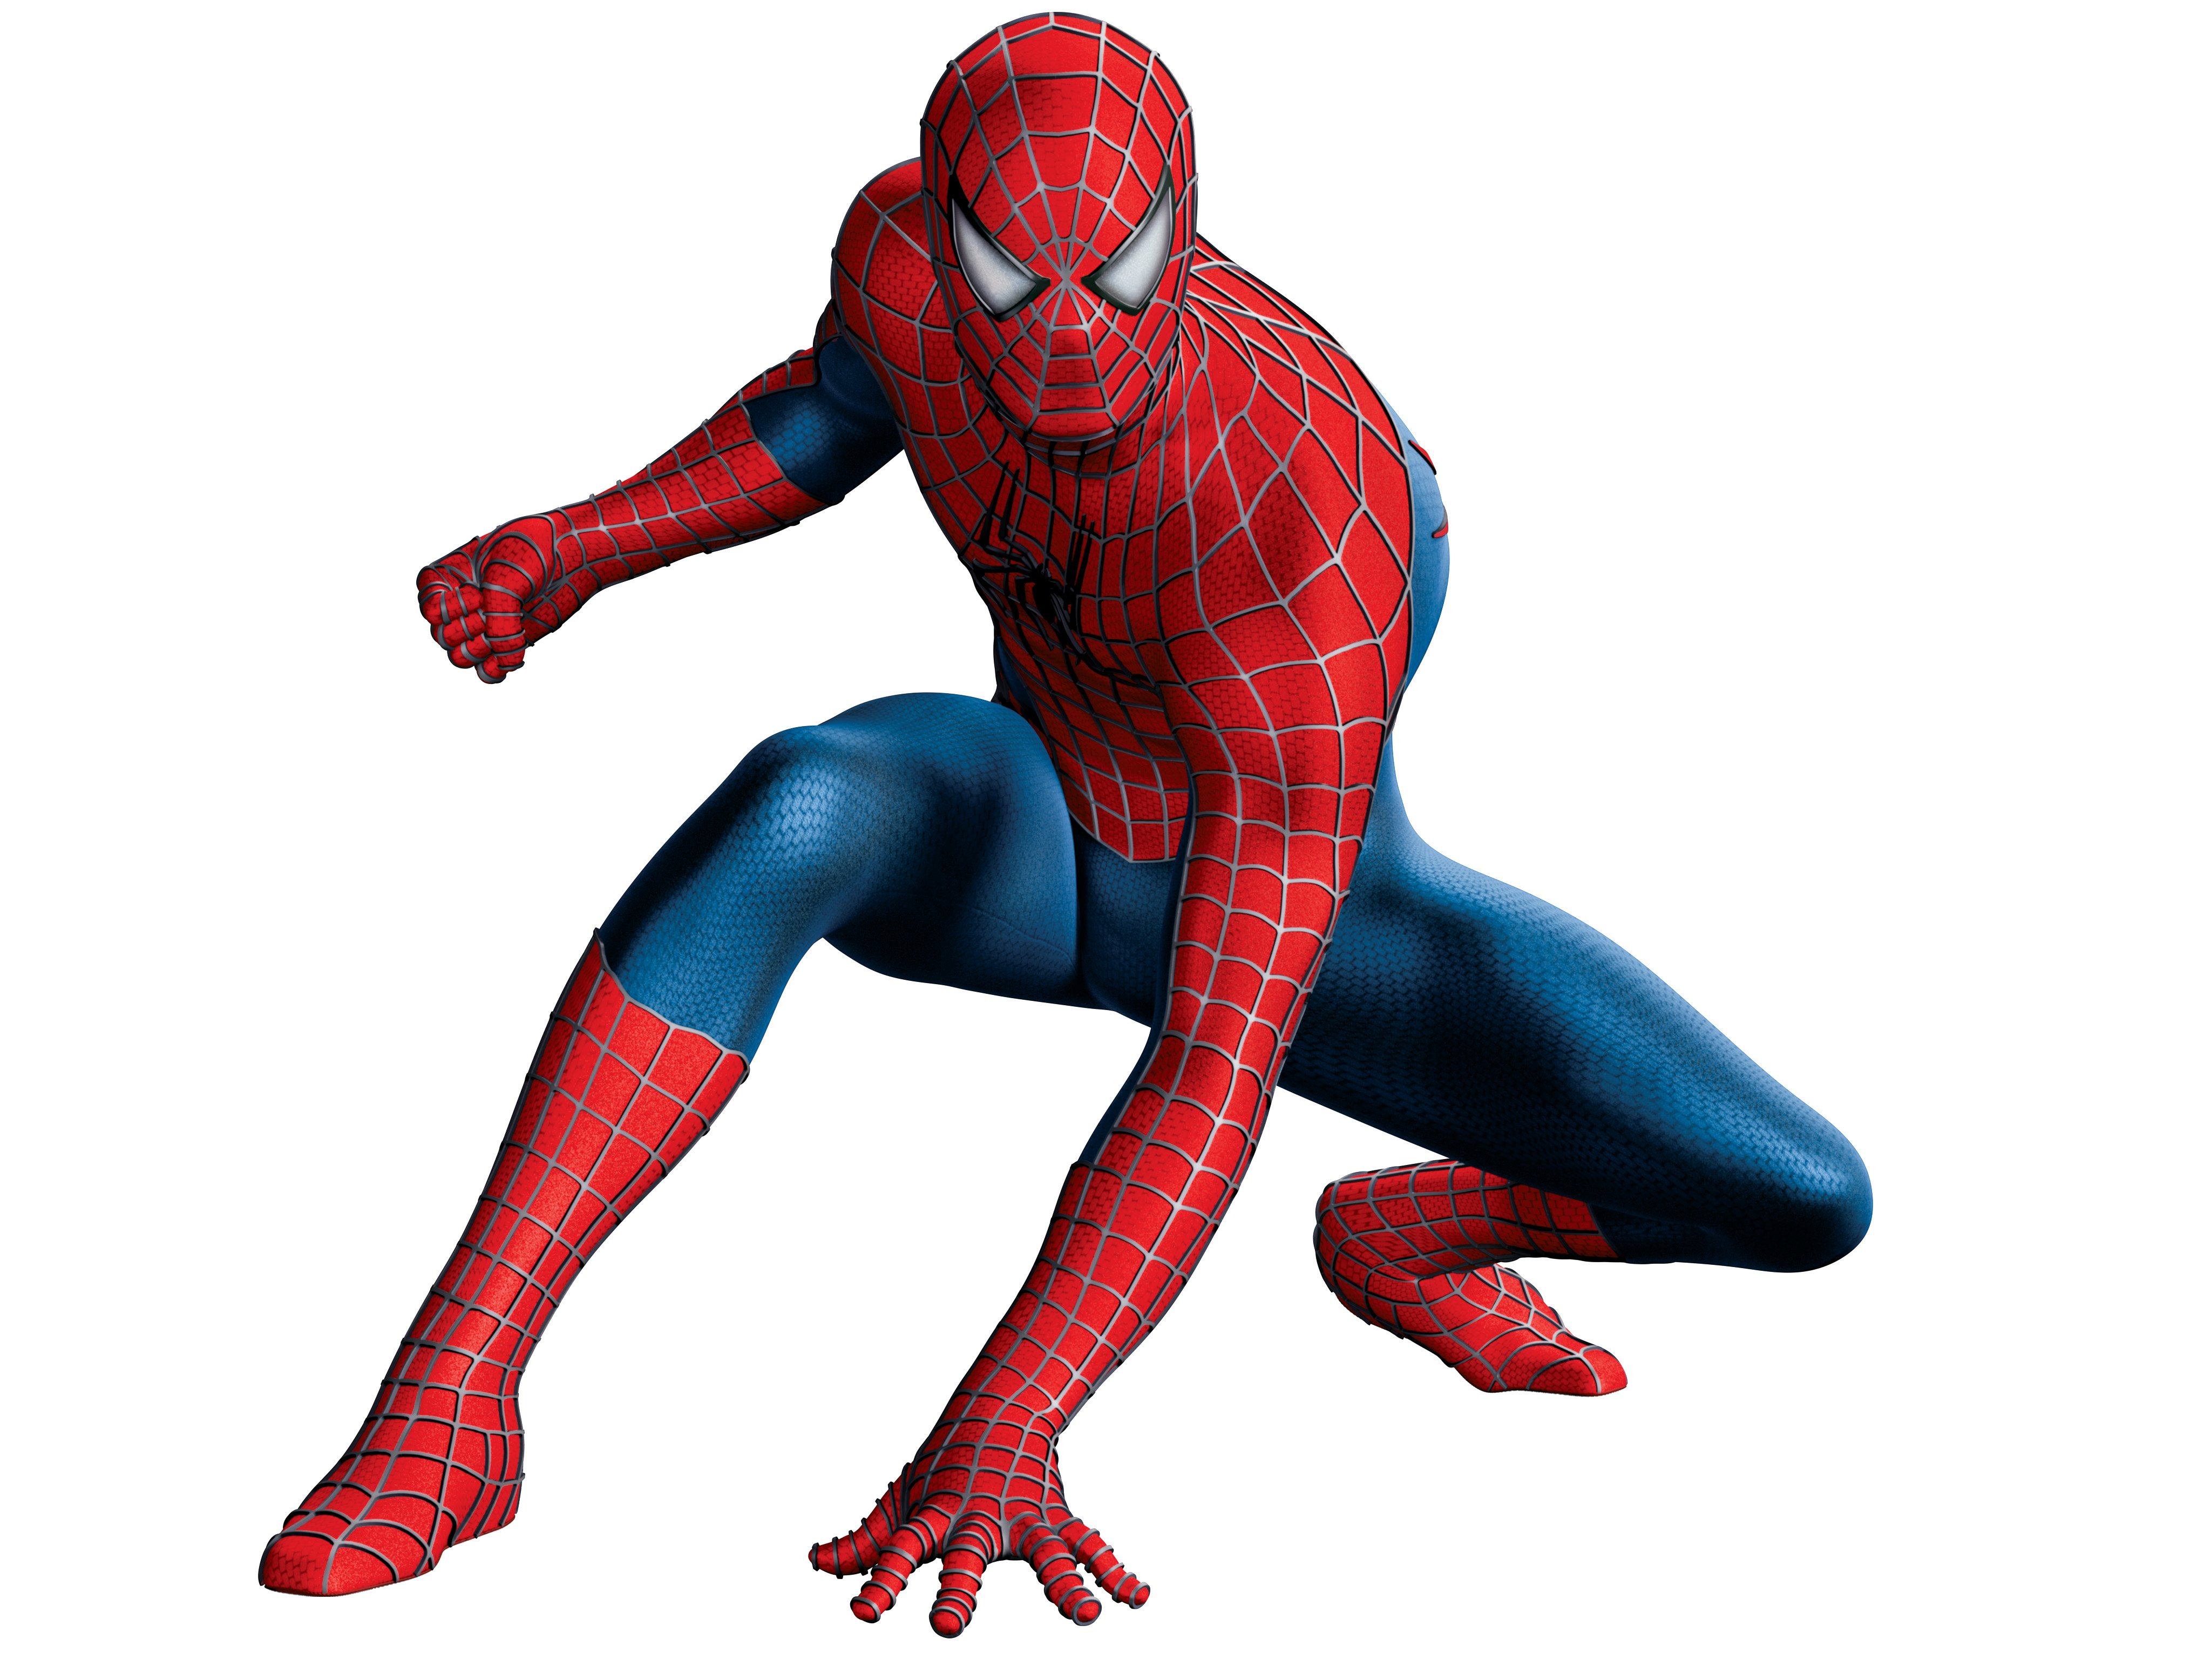 SPIDER-MAN superhero marvel spider man action spiderman wallpaper ...